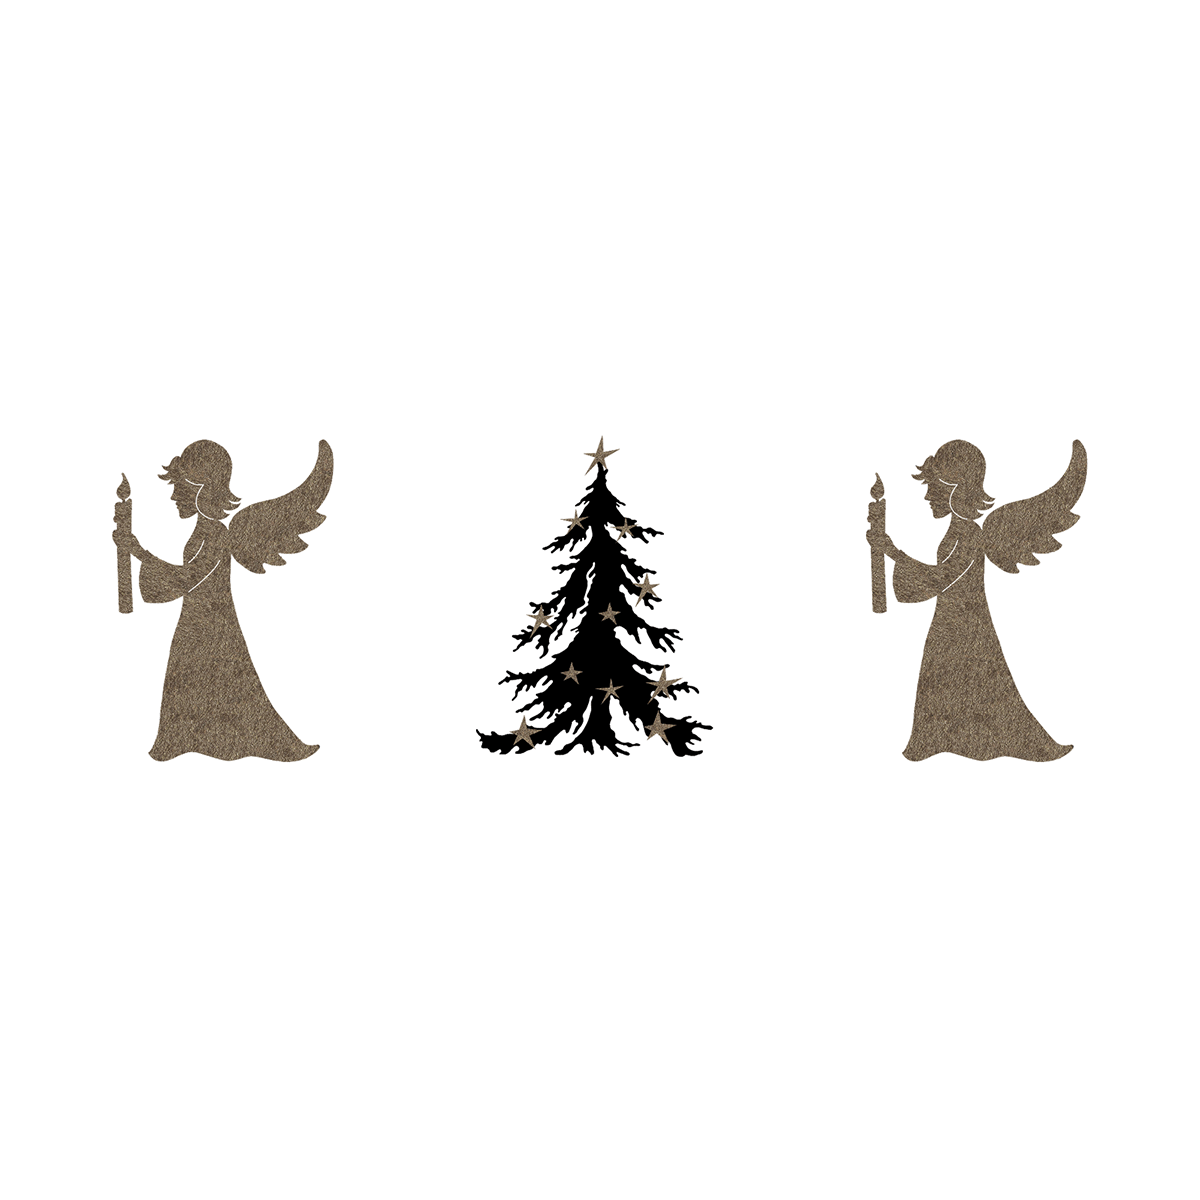 Motivgruppe Weihnachten A3: 2 Engel stehend, 1 x Christbaum